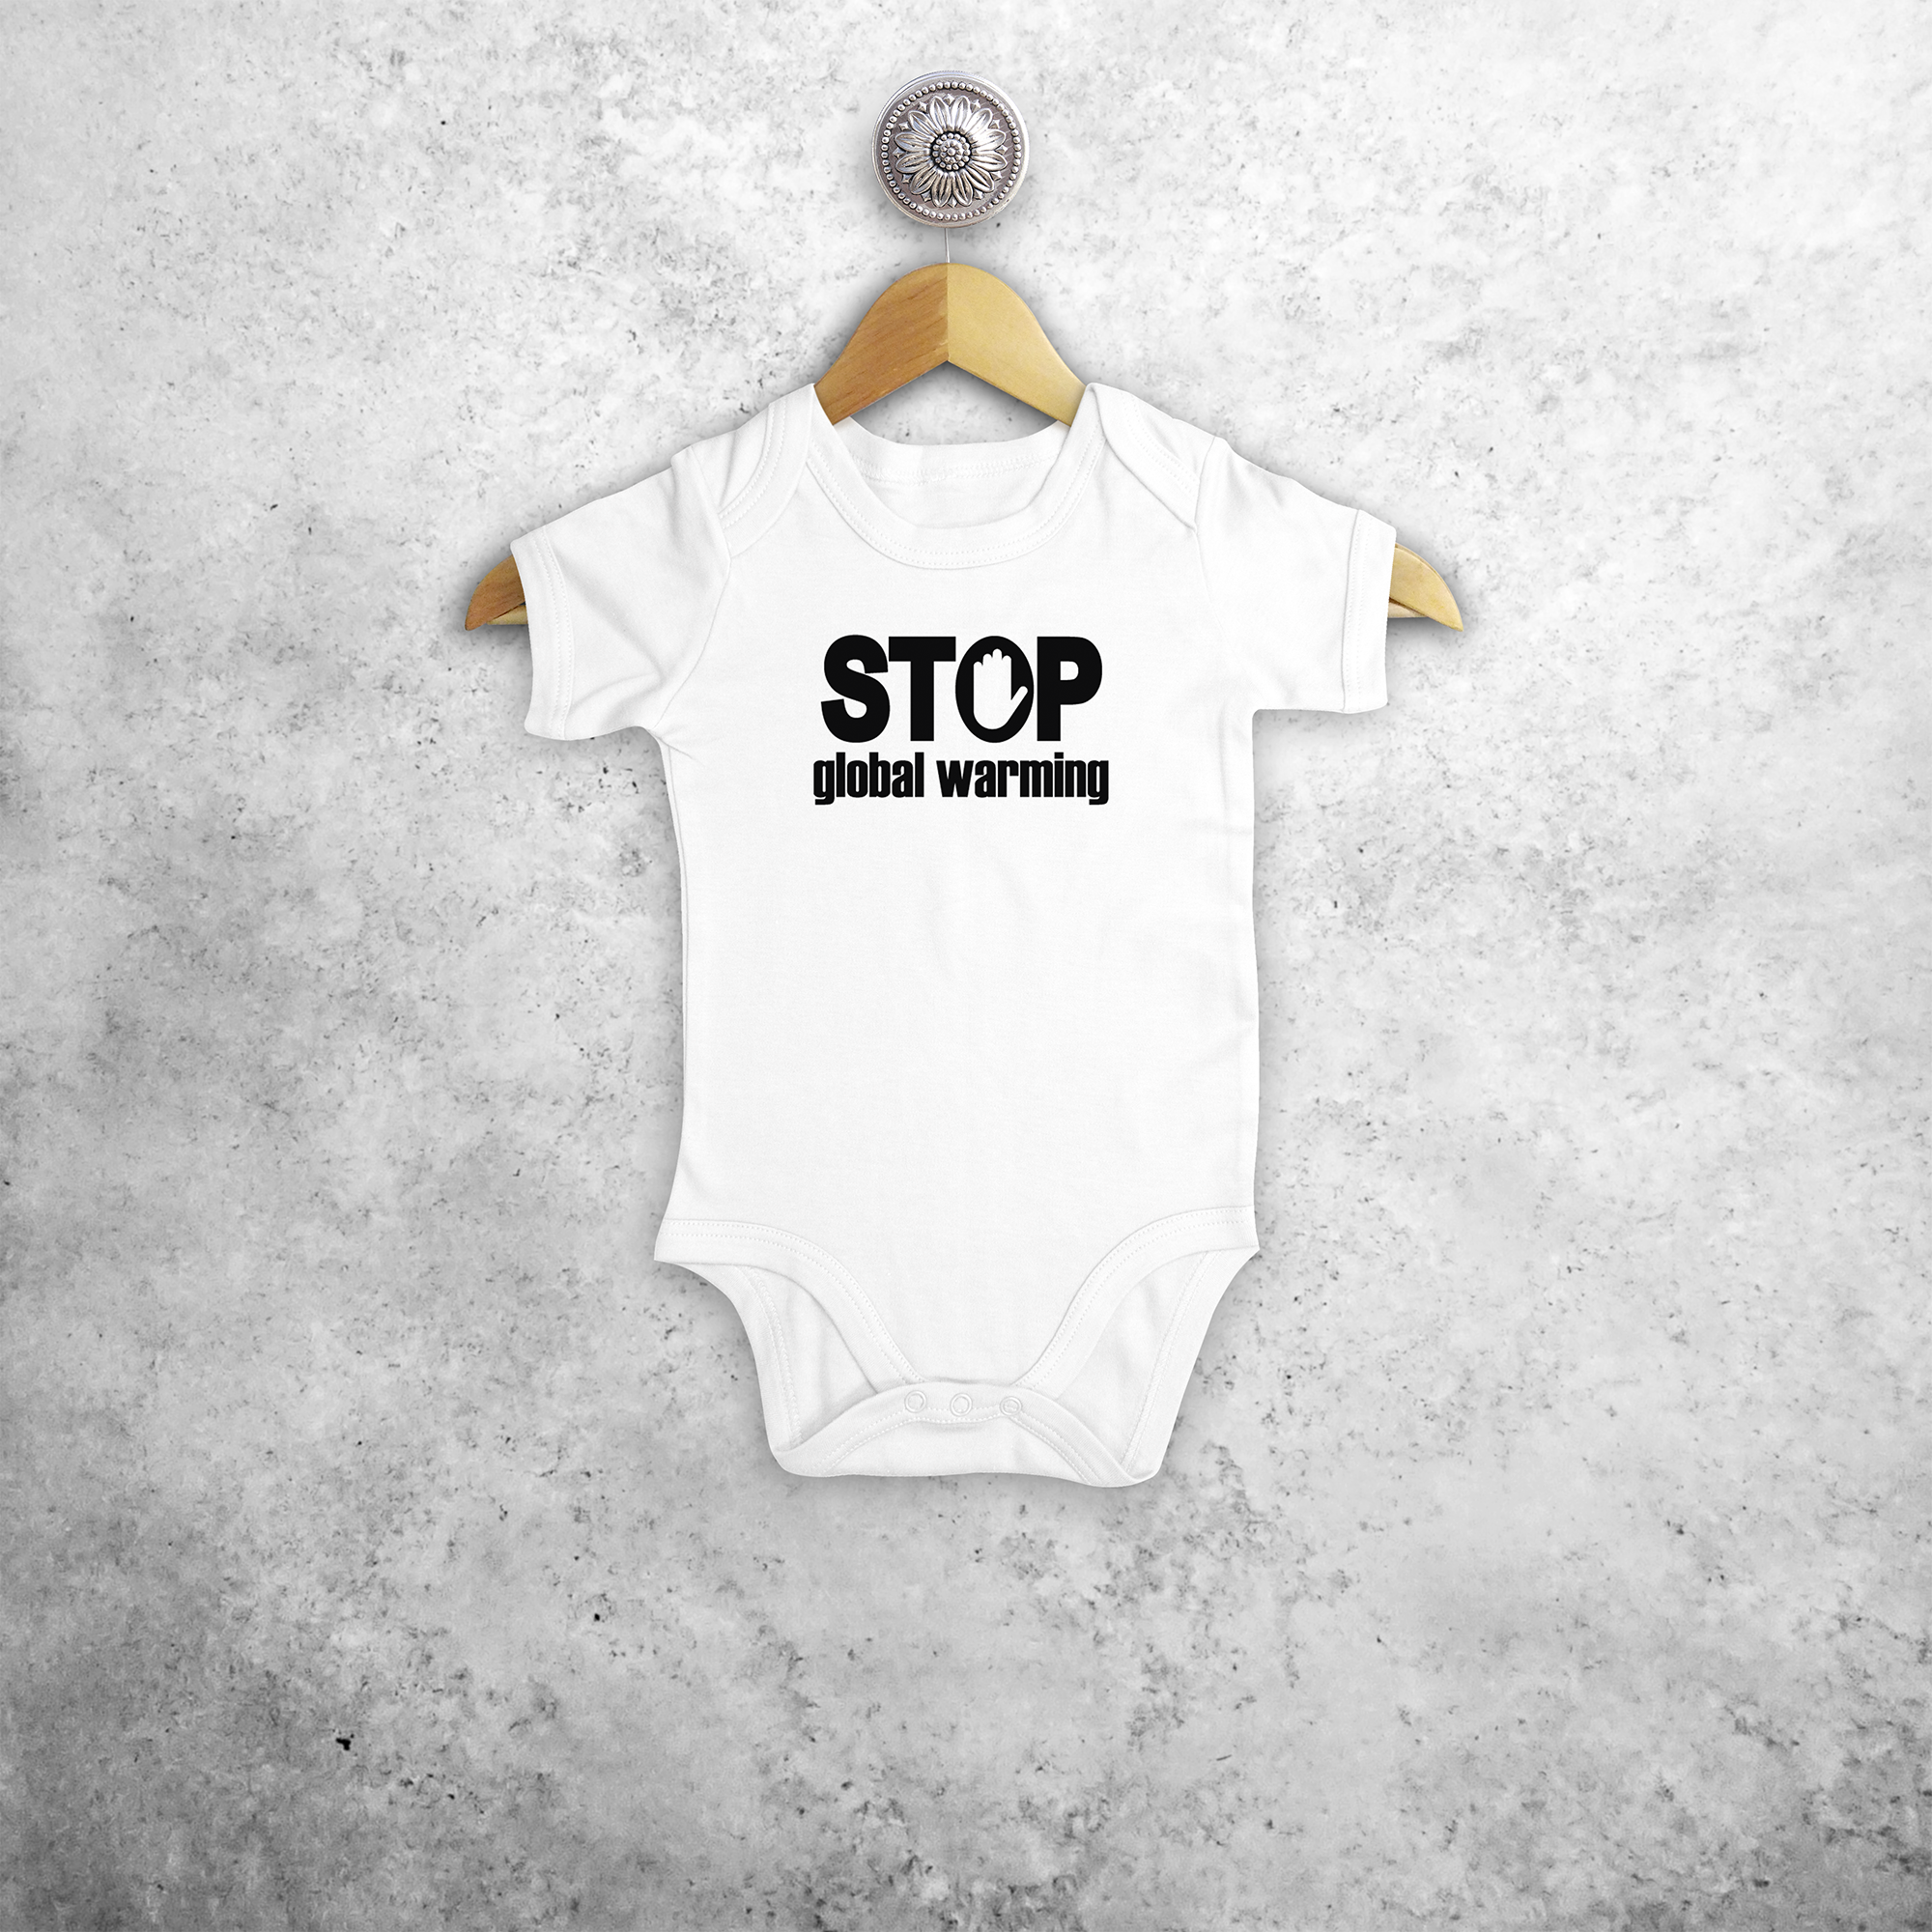 'Stop global warming' baby kruippakje met korte mouwen